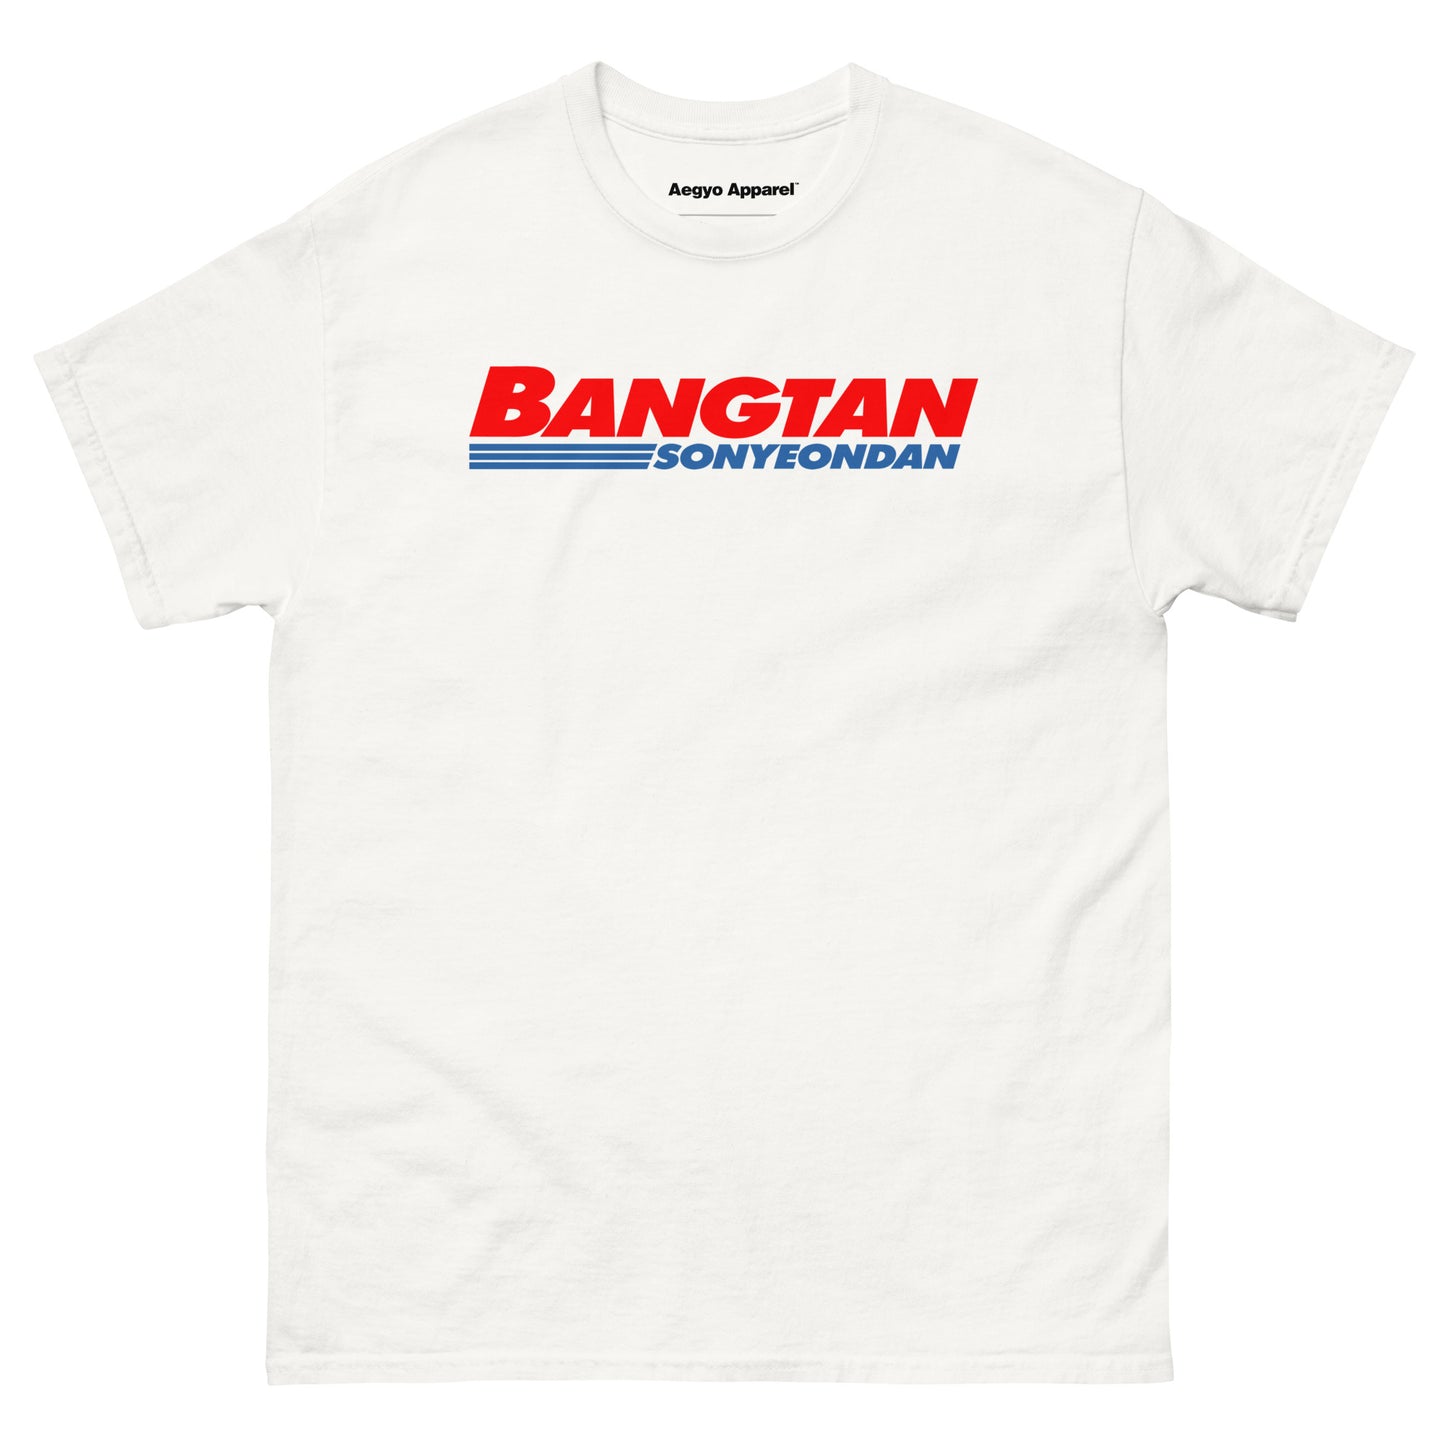 bts inspired t-shirt merch costco shirt kpop tee k-pop suga yoongi taehyung v hobi jhope jimin jungkook namjoon rm rap monster hybe funny